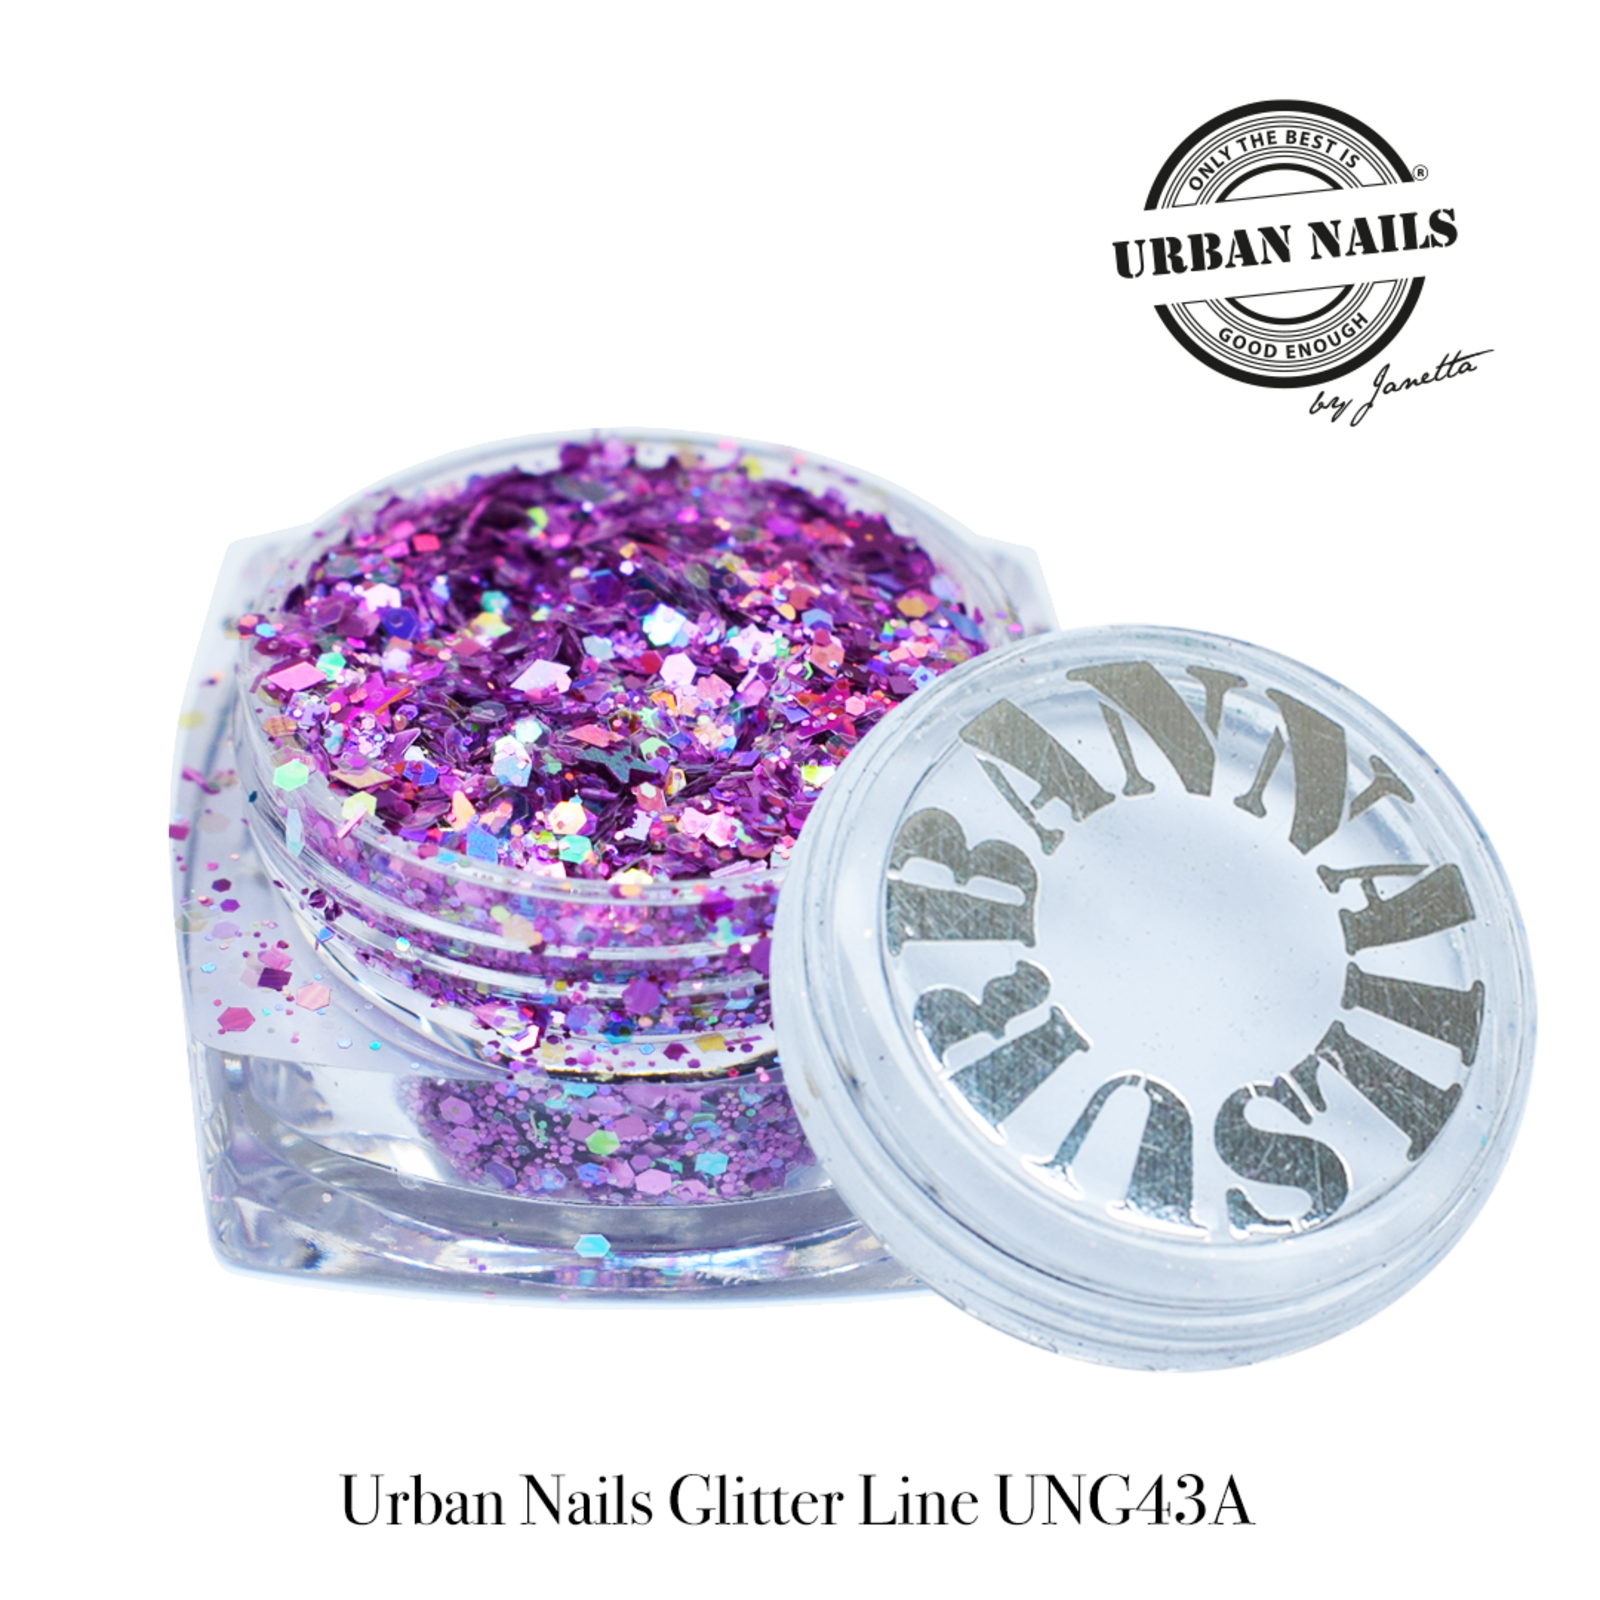 Urban nails Glitter Line UNG43-A